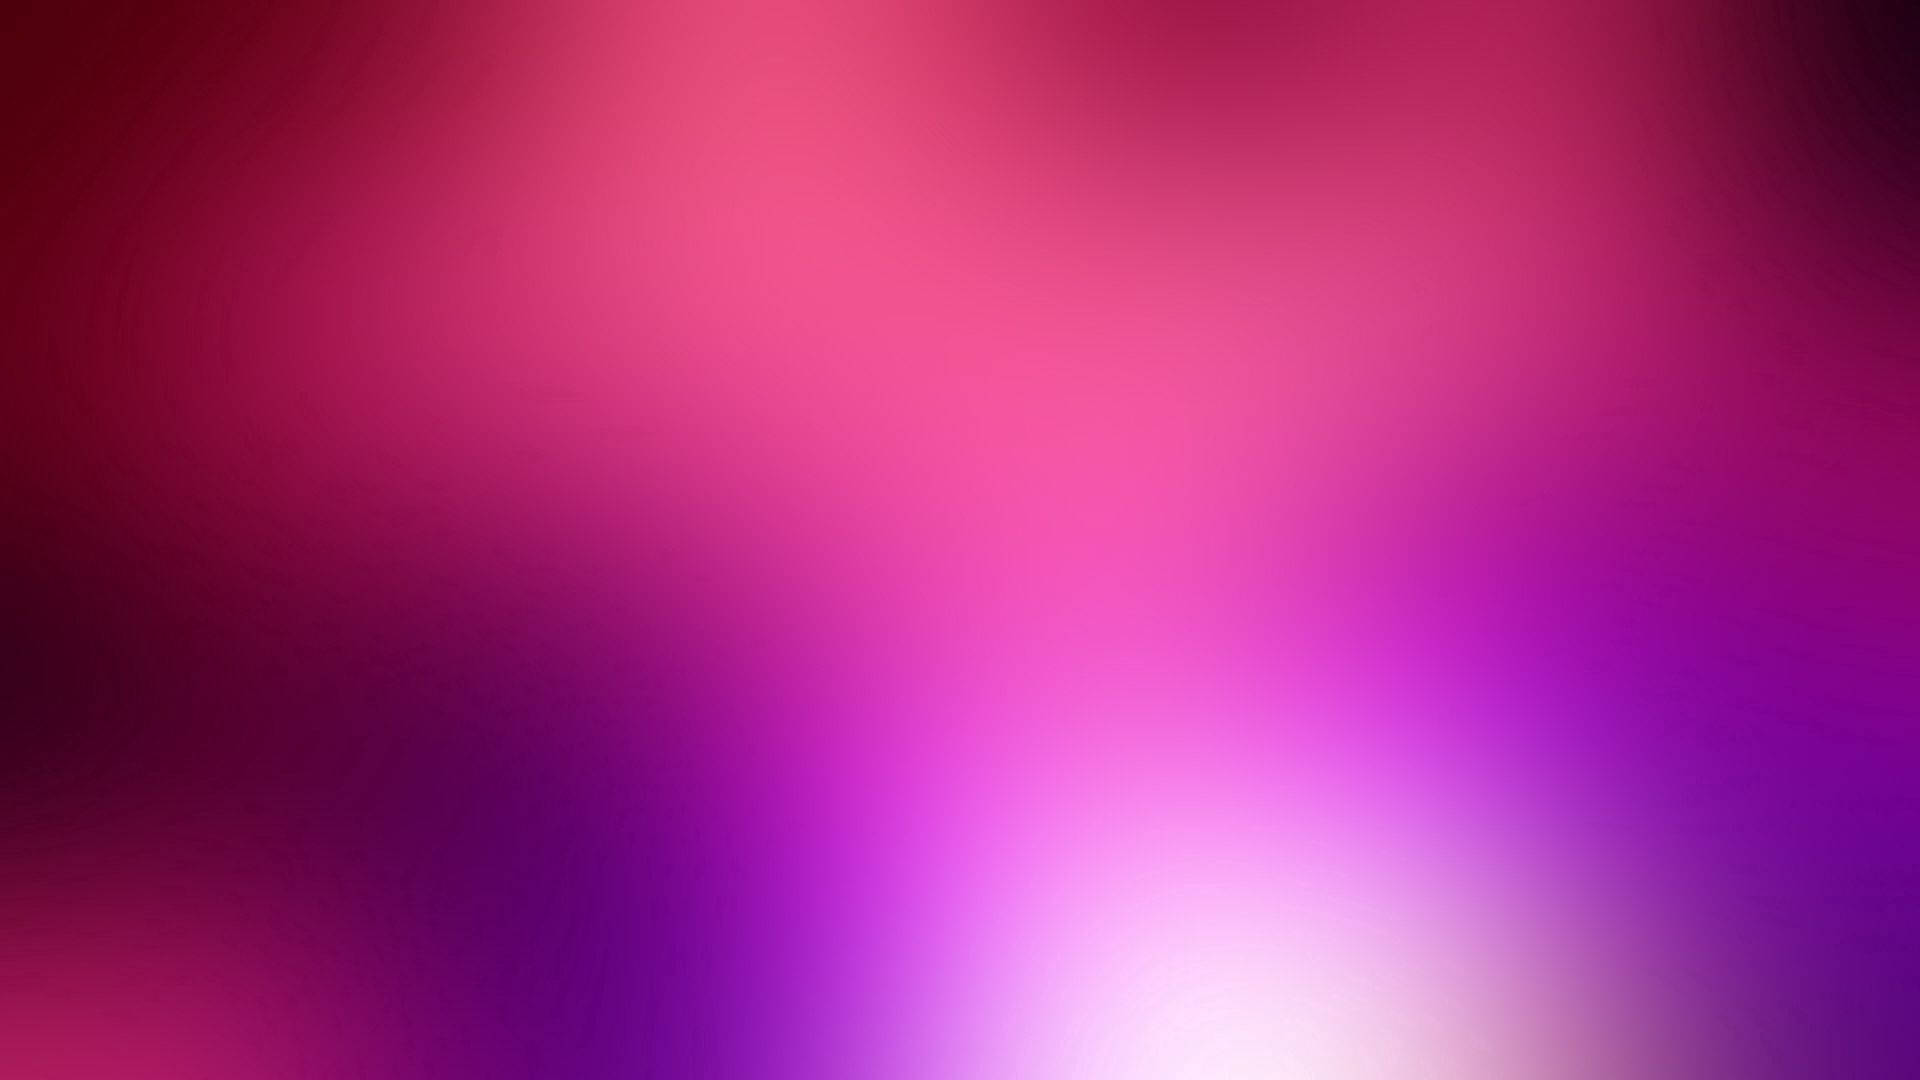 Bright Blurred Pink